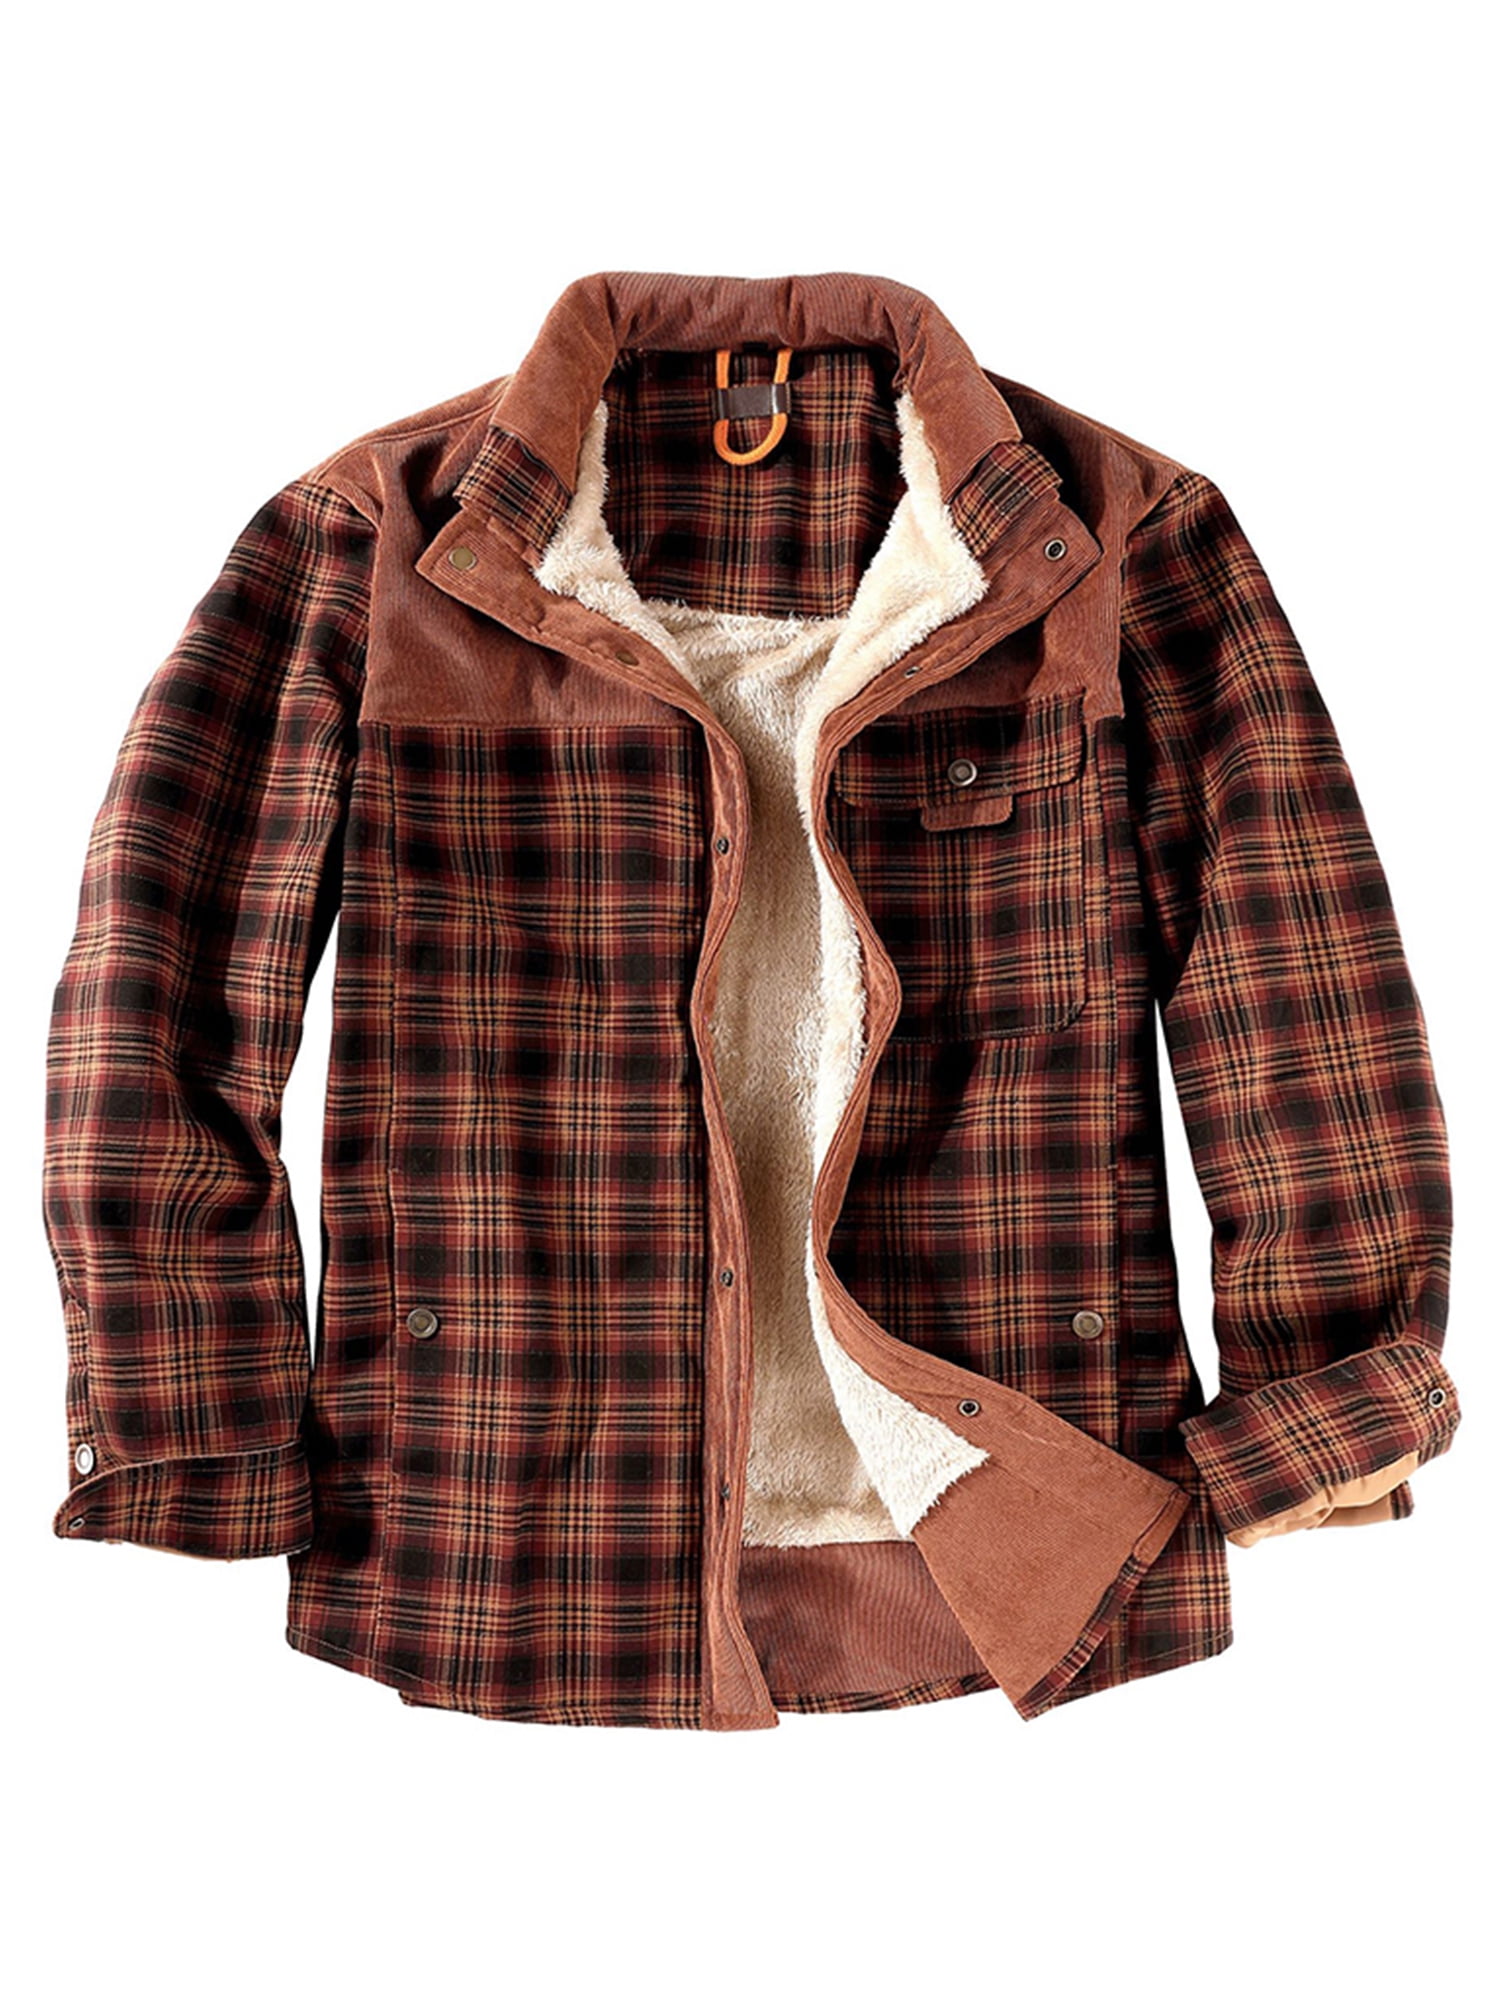 zip NEW  S  M  L XL 2XL Full Fur Fleece Padded THICK  lumberjack Shirt Jacket 